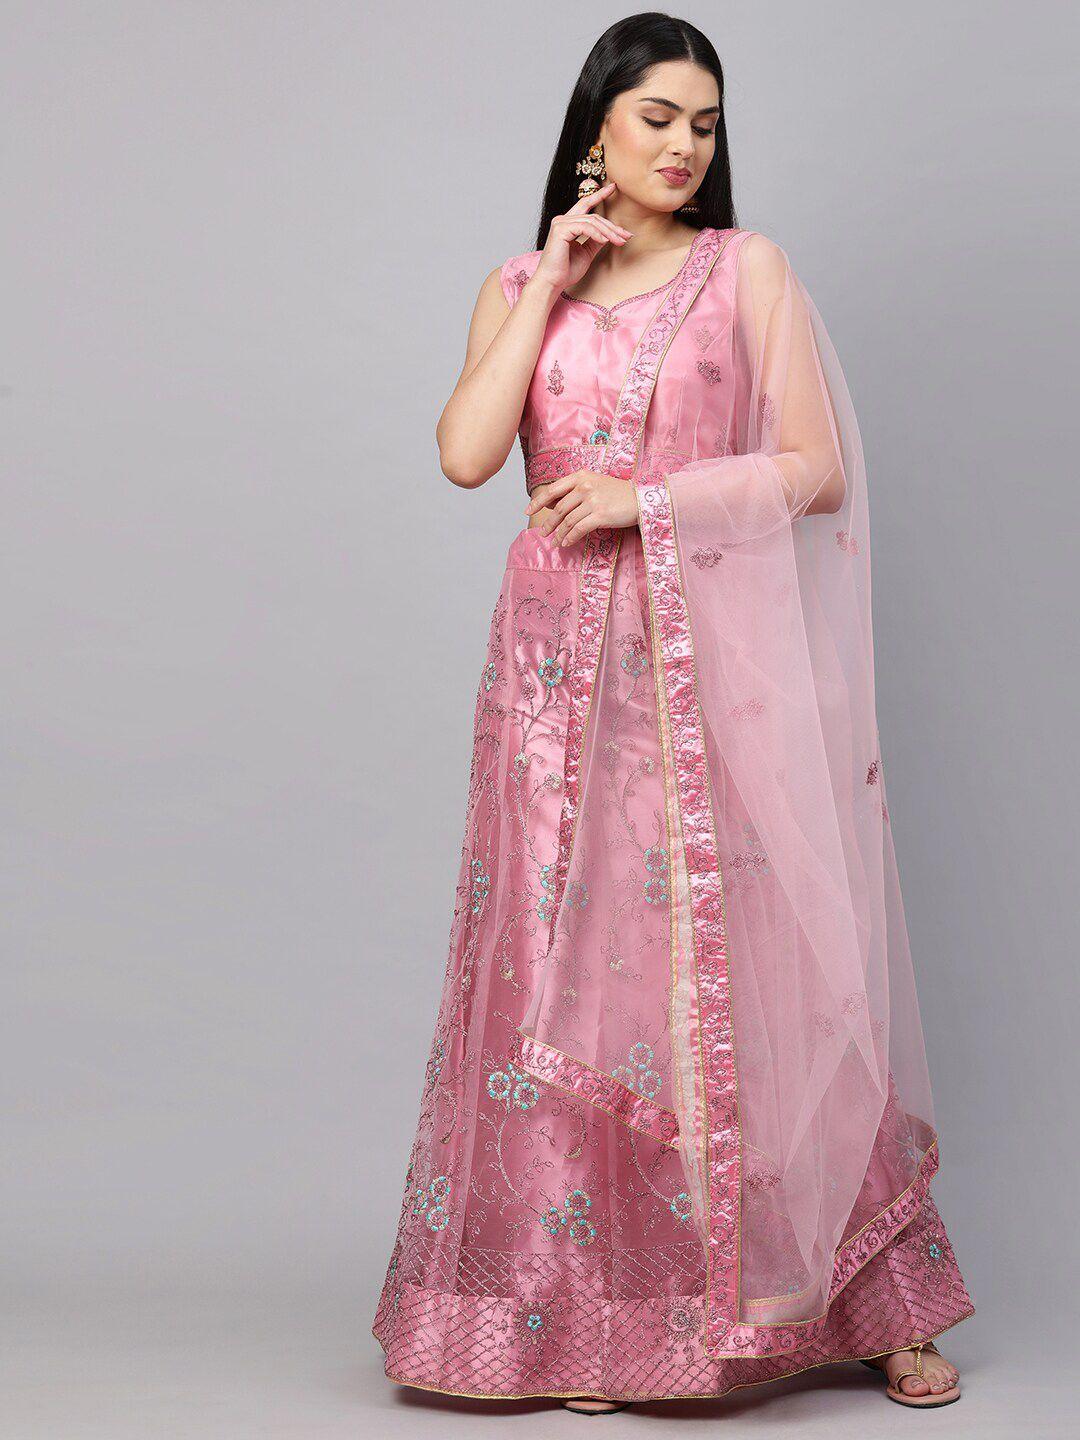 rajesh-silk-mills-women-pink-lehenga-choli